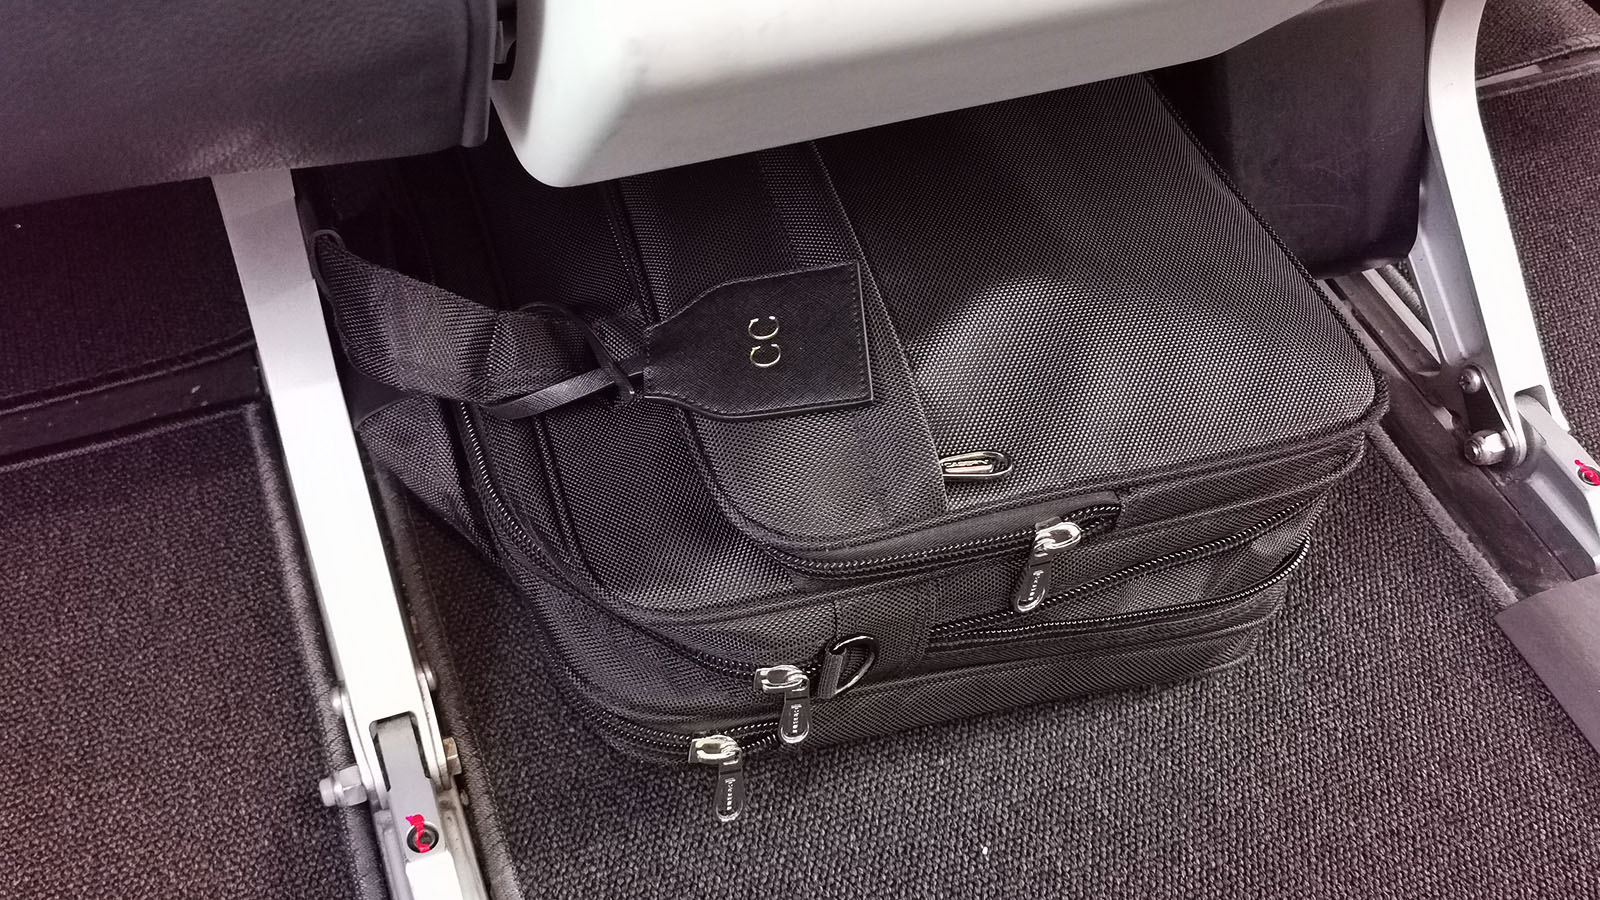 Laptop bag stored in row 2 of Virgin Australia Boeing 737 Business Class